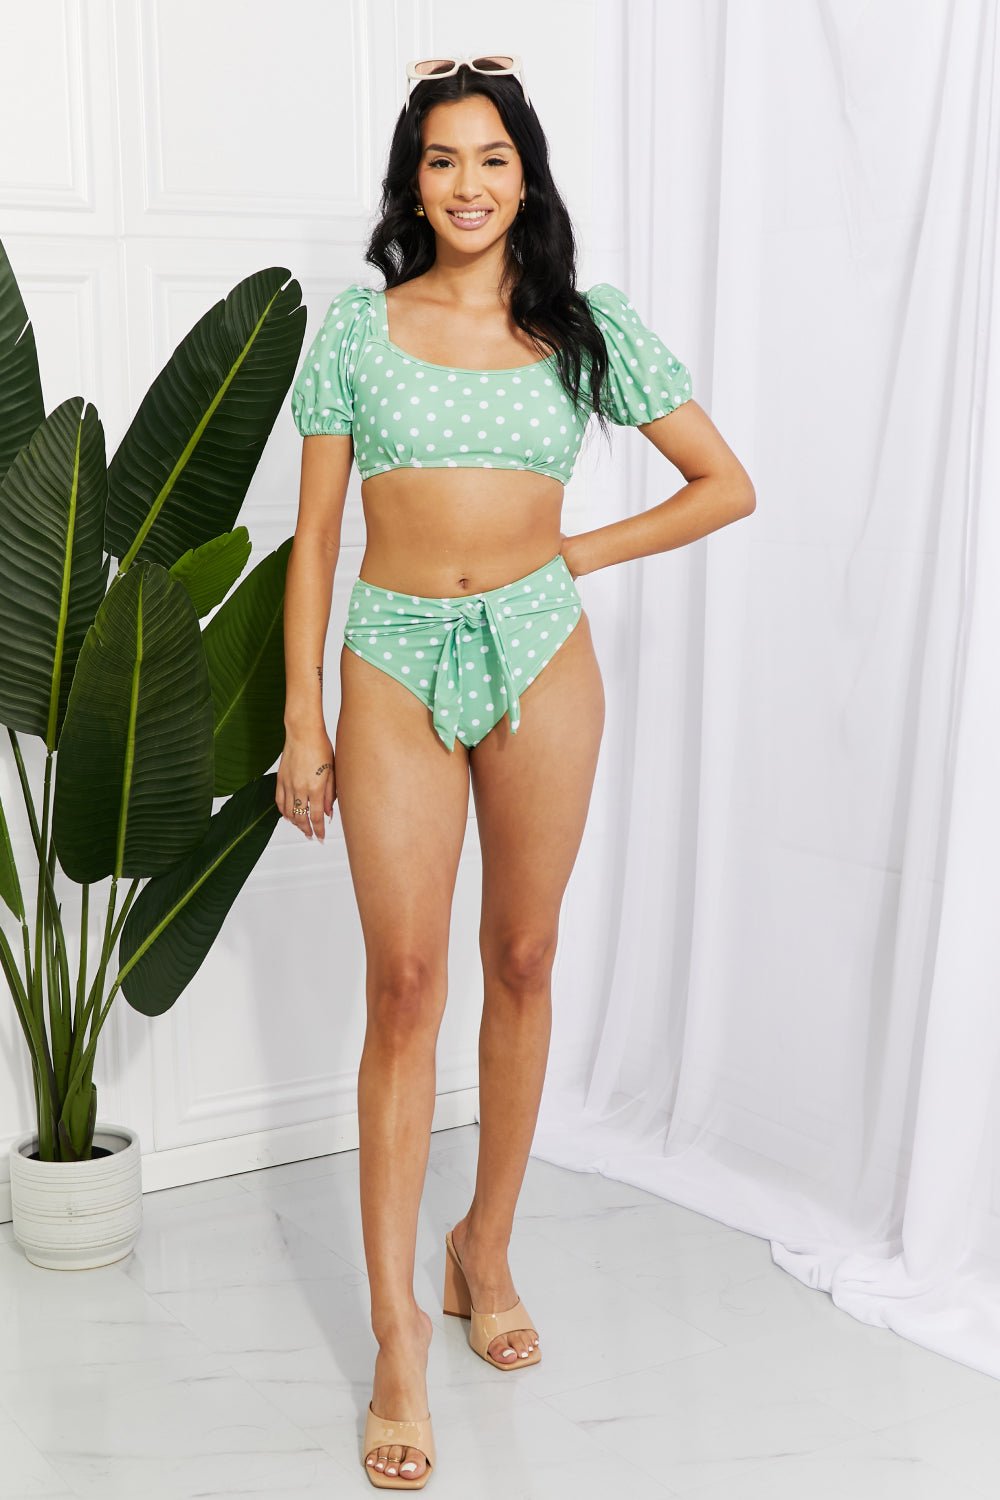 Marina West Swim Vacay Ready Puff Sleeve Bikini in Gum Leaf - Happily Ever Atchison Shop Co.